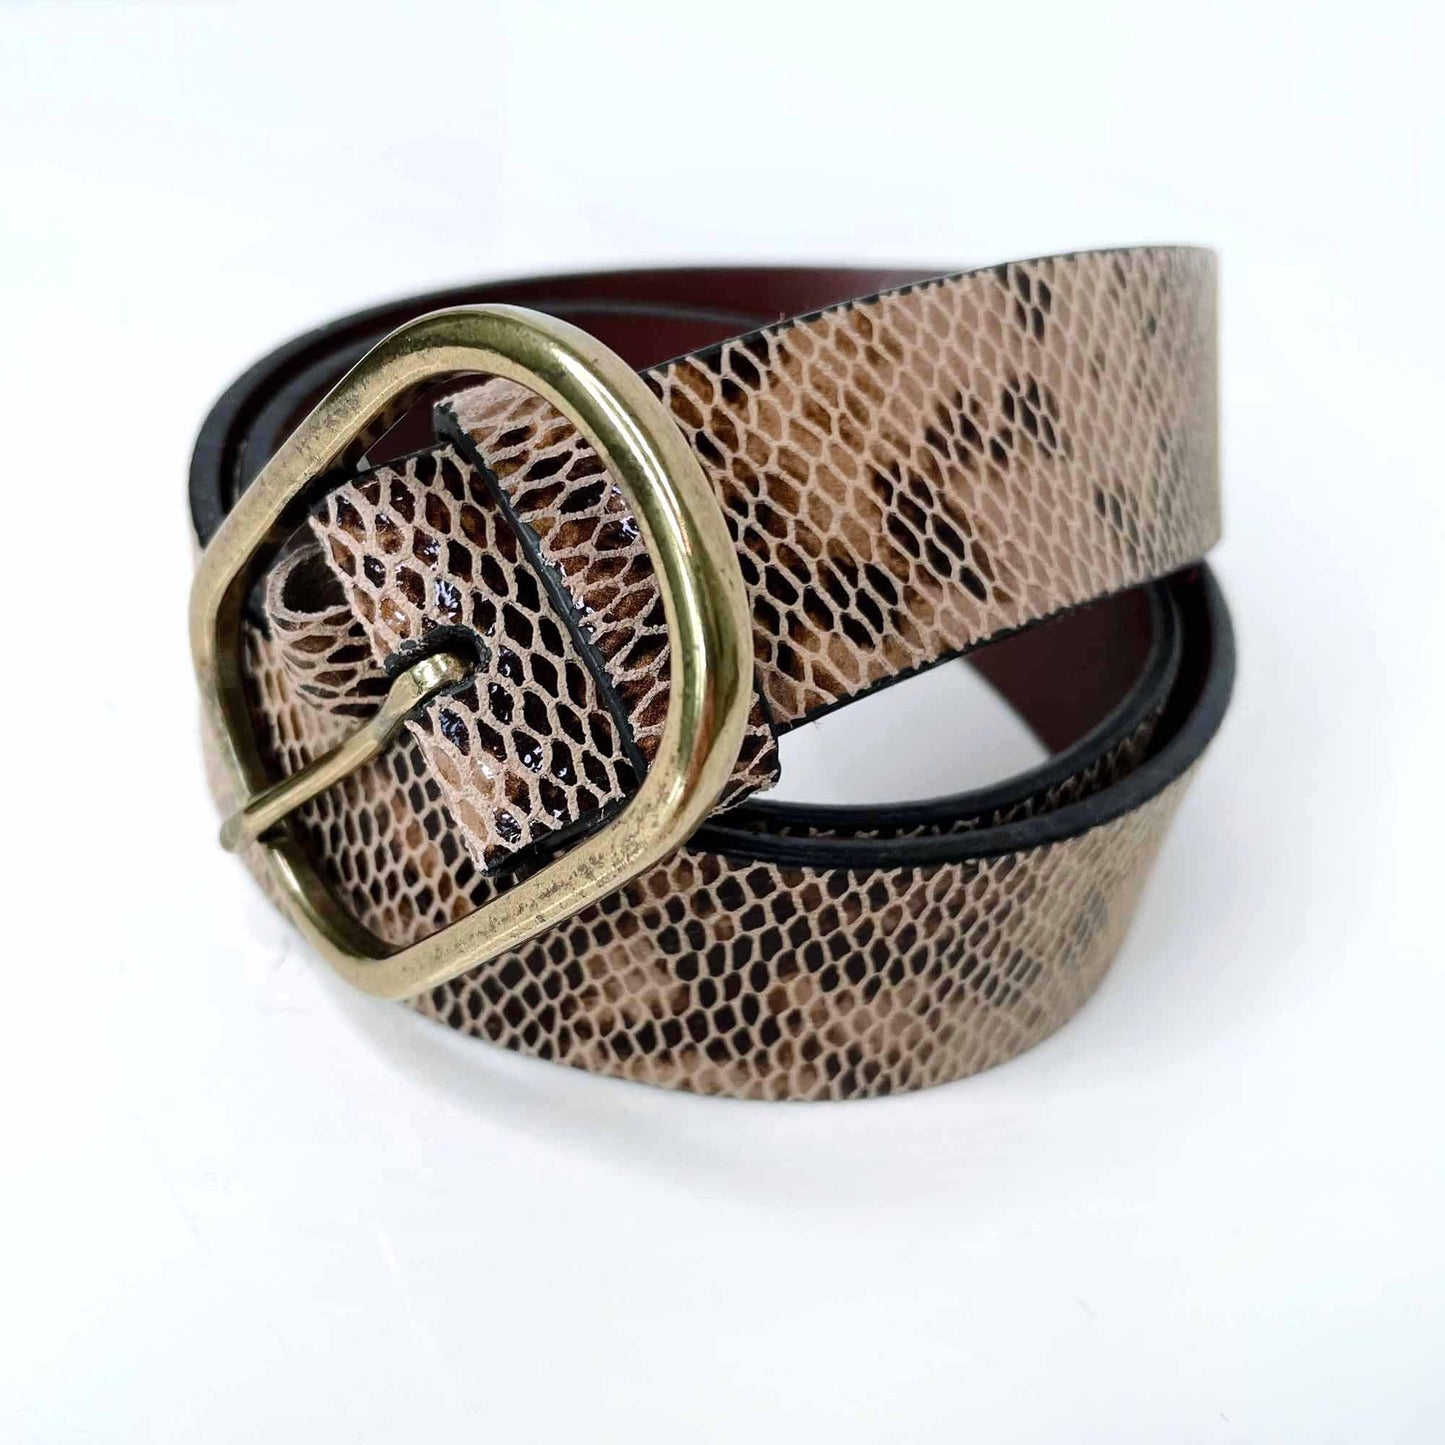 anthropologie leather snakeskin belt - 36" (xs)